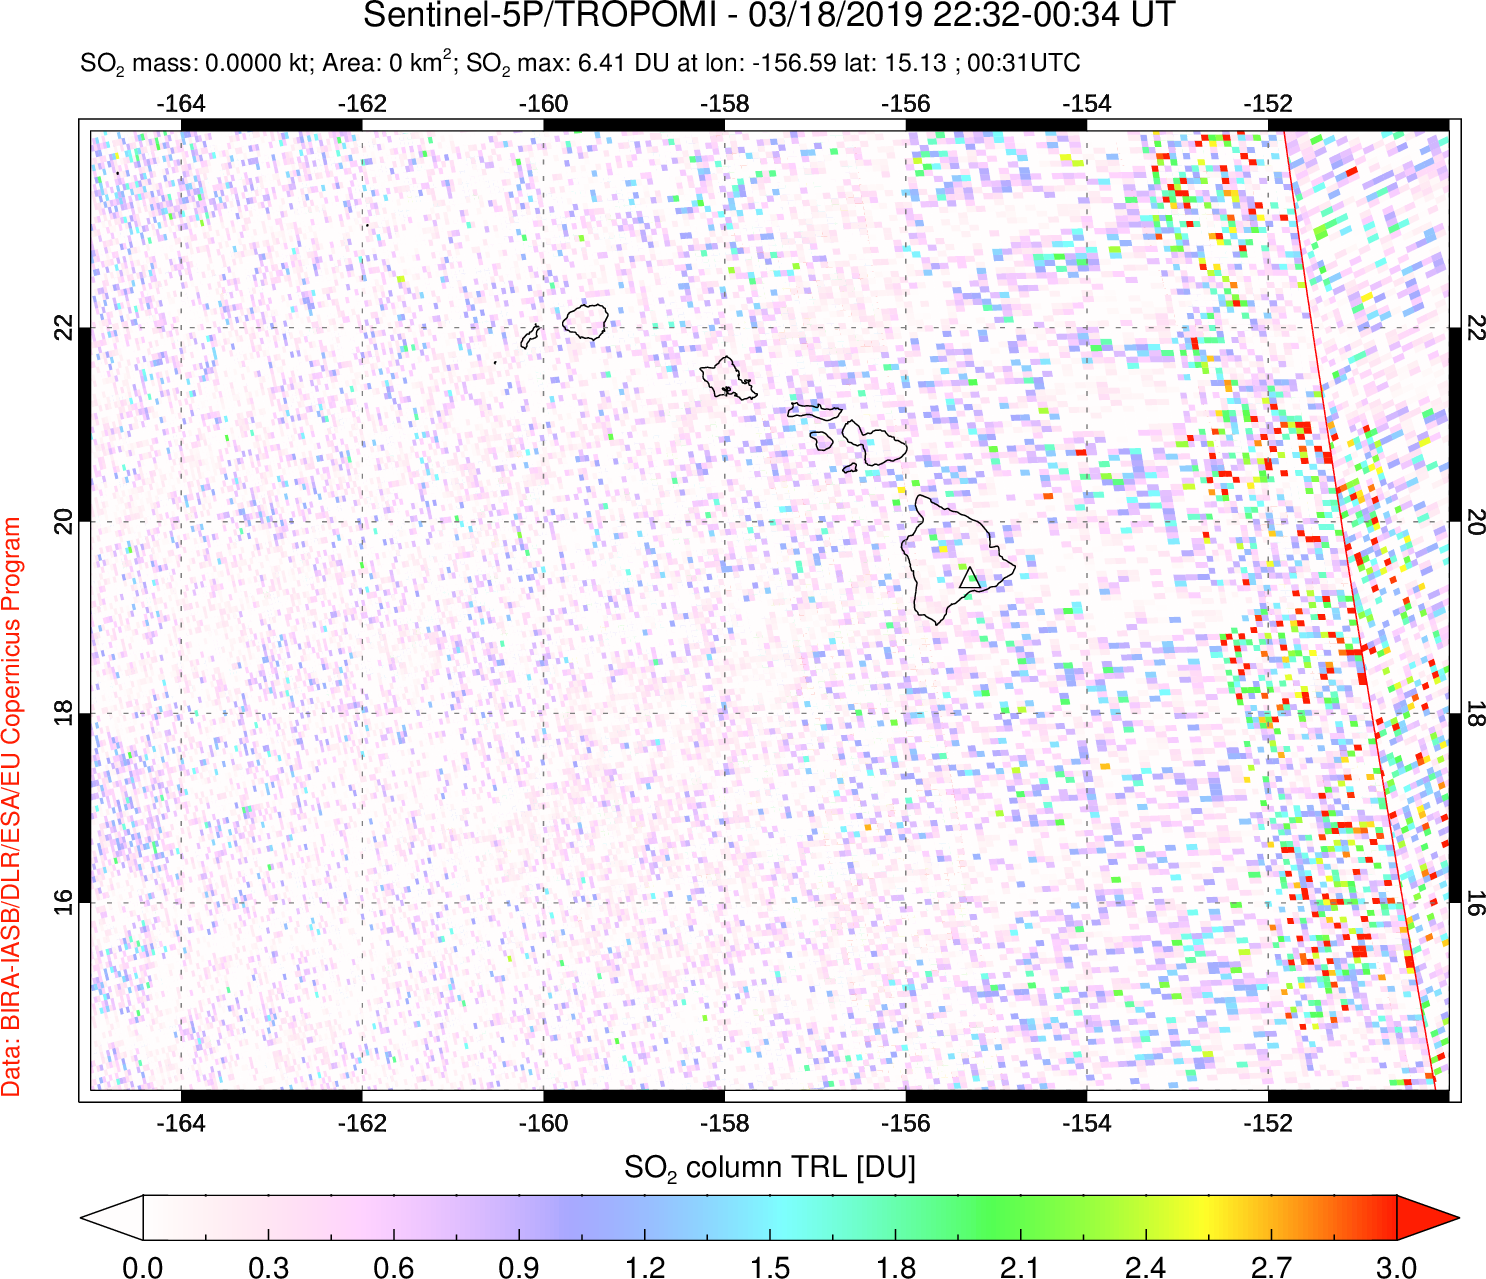 A sulfur dioxide image over Hawaii, USA on Mar 18, 2019.